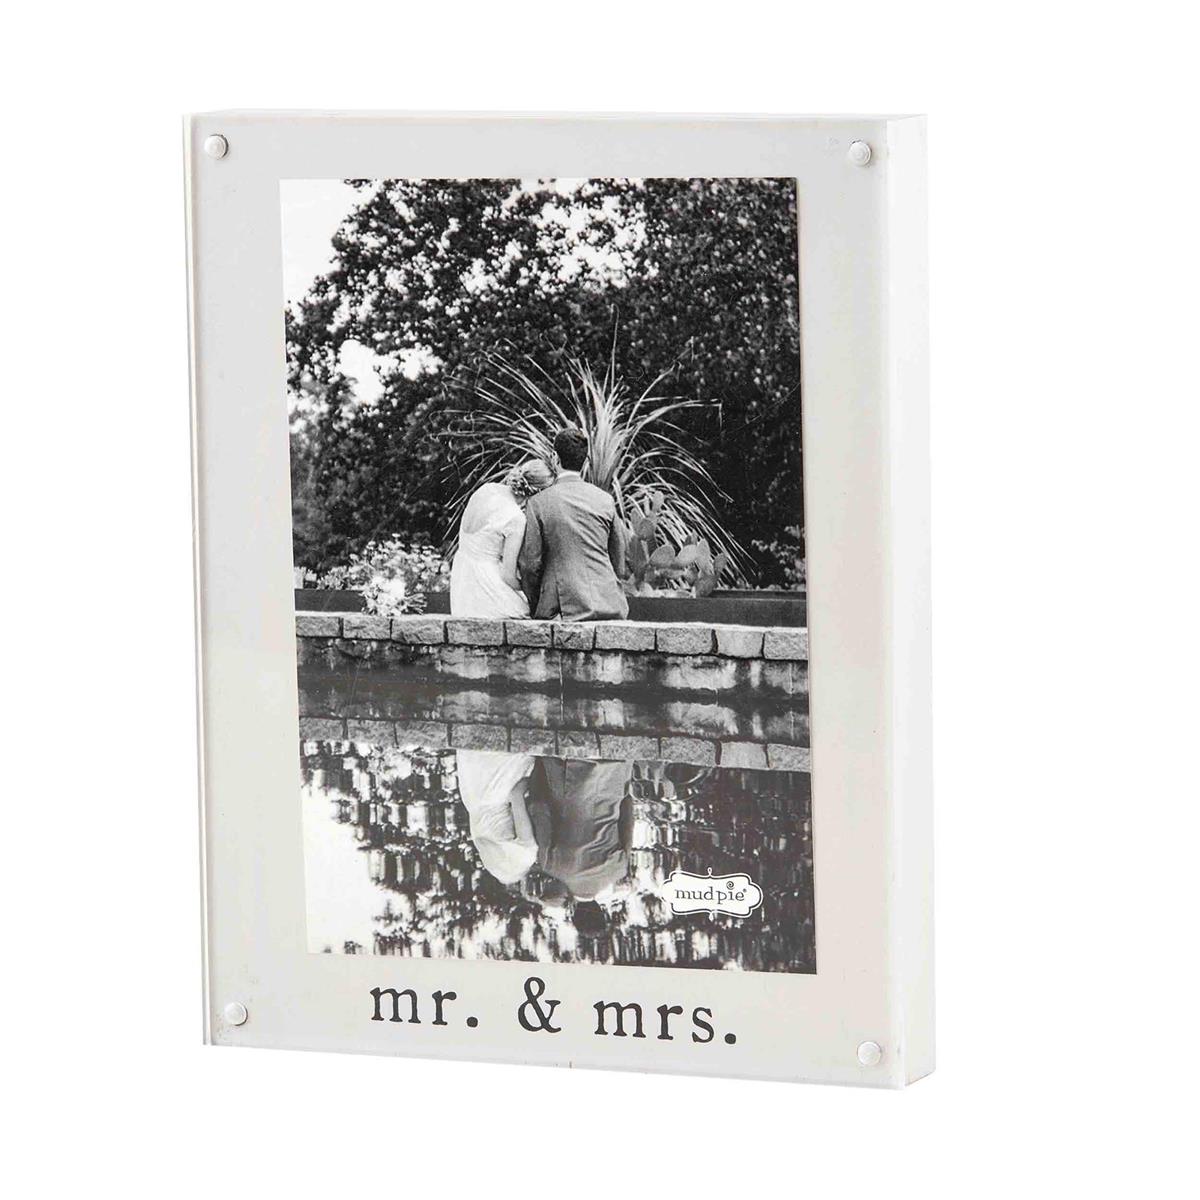 Mr. & Mrs. acrylic frame